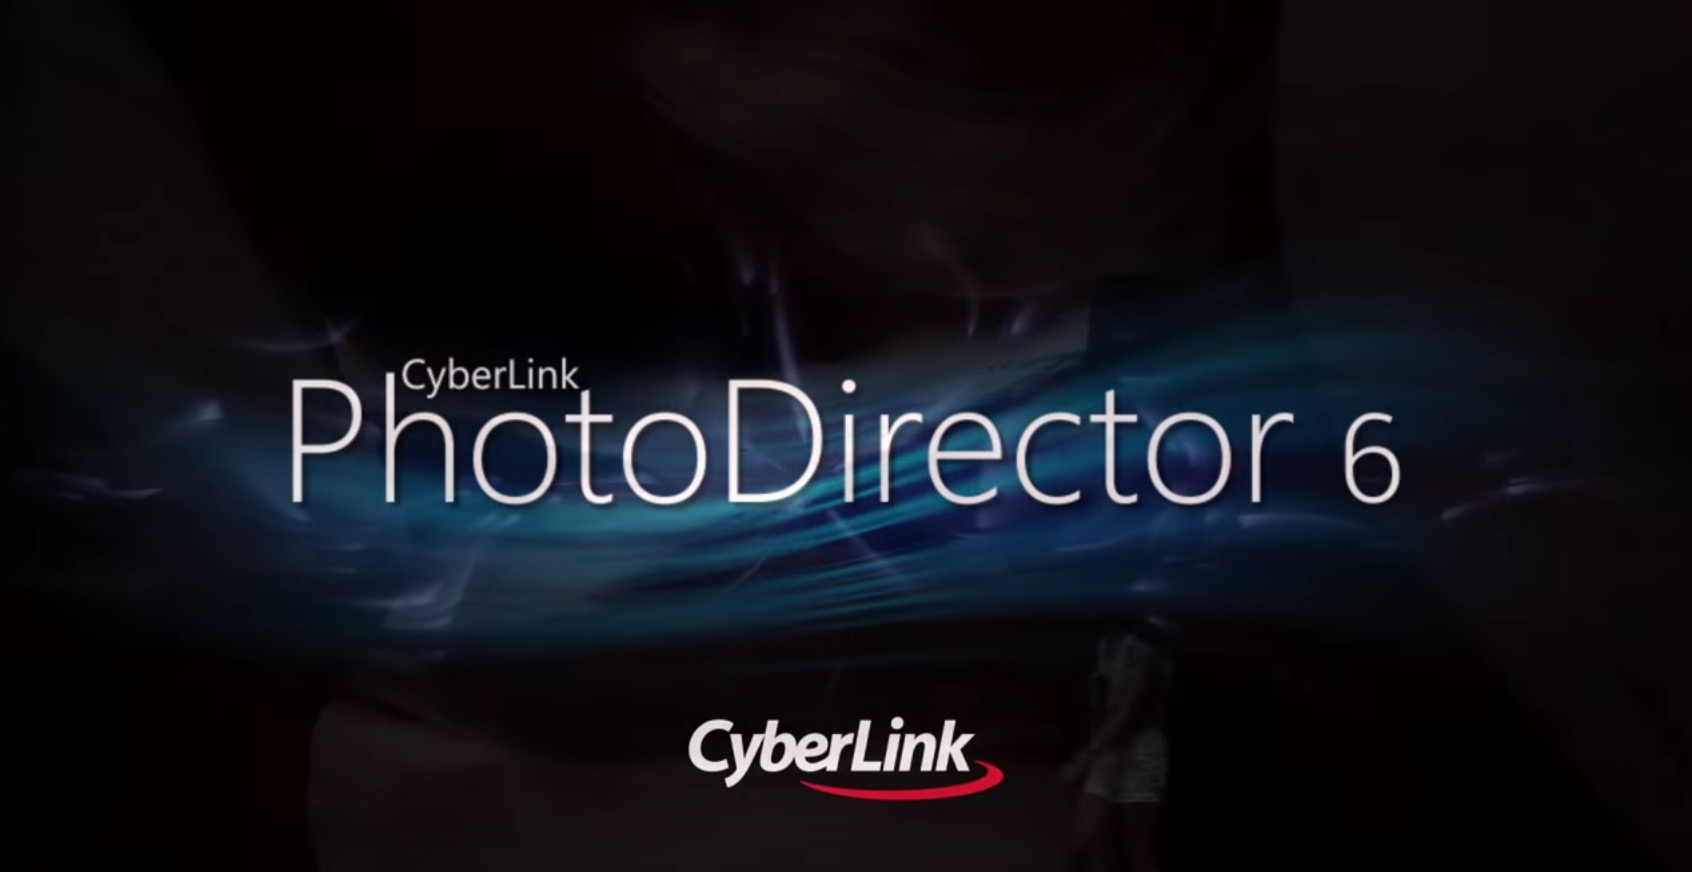 Mời tải miễn phí phần mềm CyberLink PhotoDirector 6 Deluxe trị giá $49.99